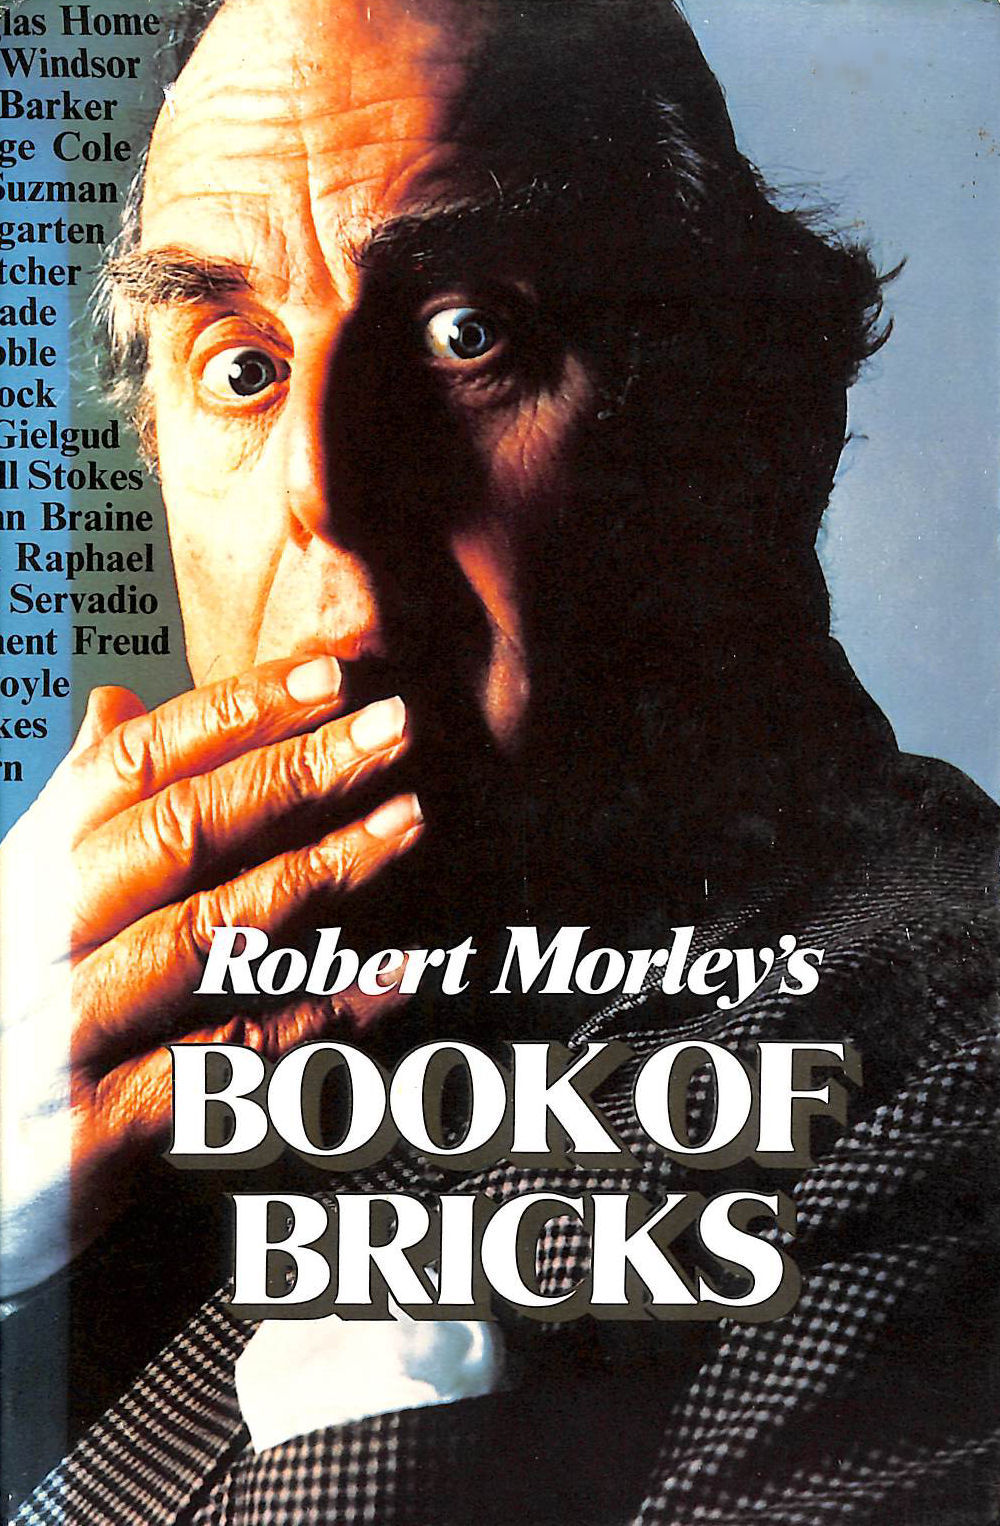 GEOFFREY DICKINSON [ILLUSTRATOR]; JOHN JENSEN [ILLUSTRATOR]; ROBERT MORLEY [COMPILER]; - Robert Morley's Book of Bricks